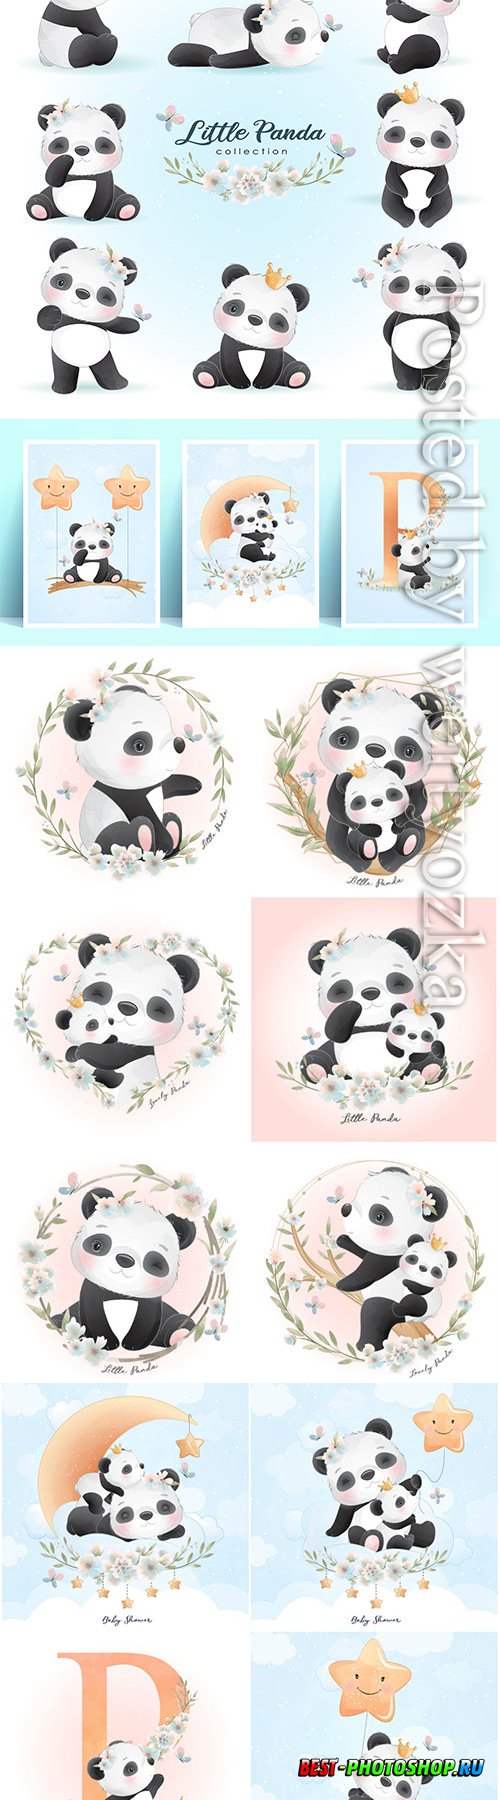 Cute panda with floral illustration premium vector